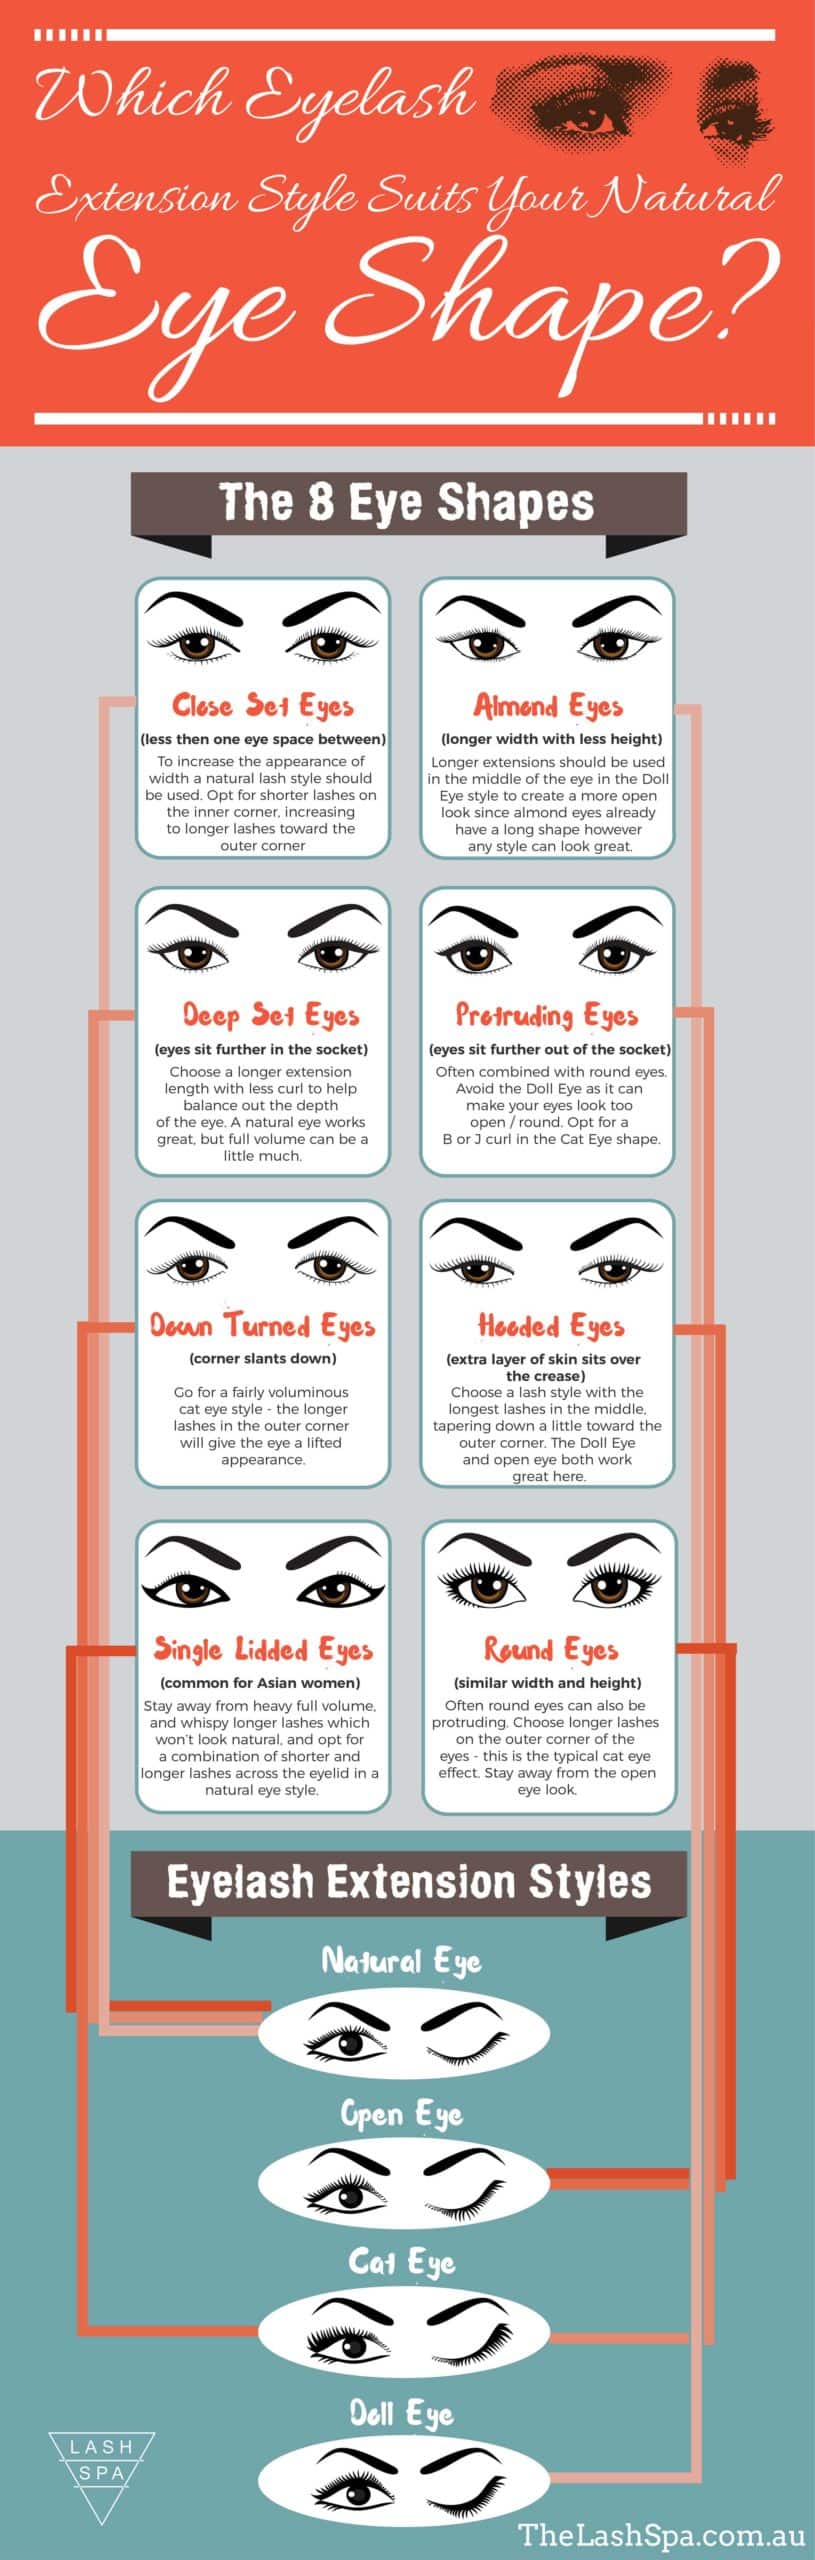 Eyelash Styles Infographic